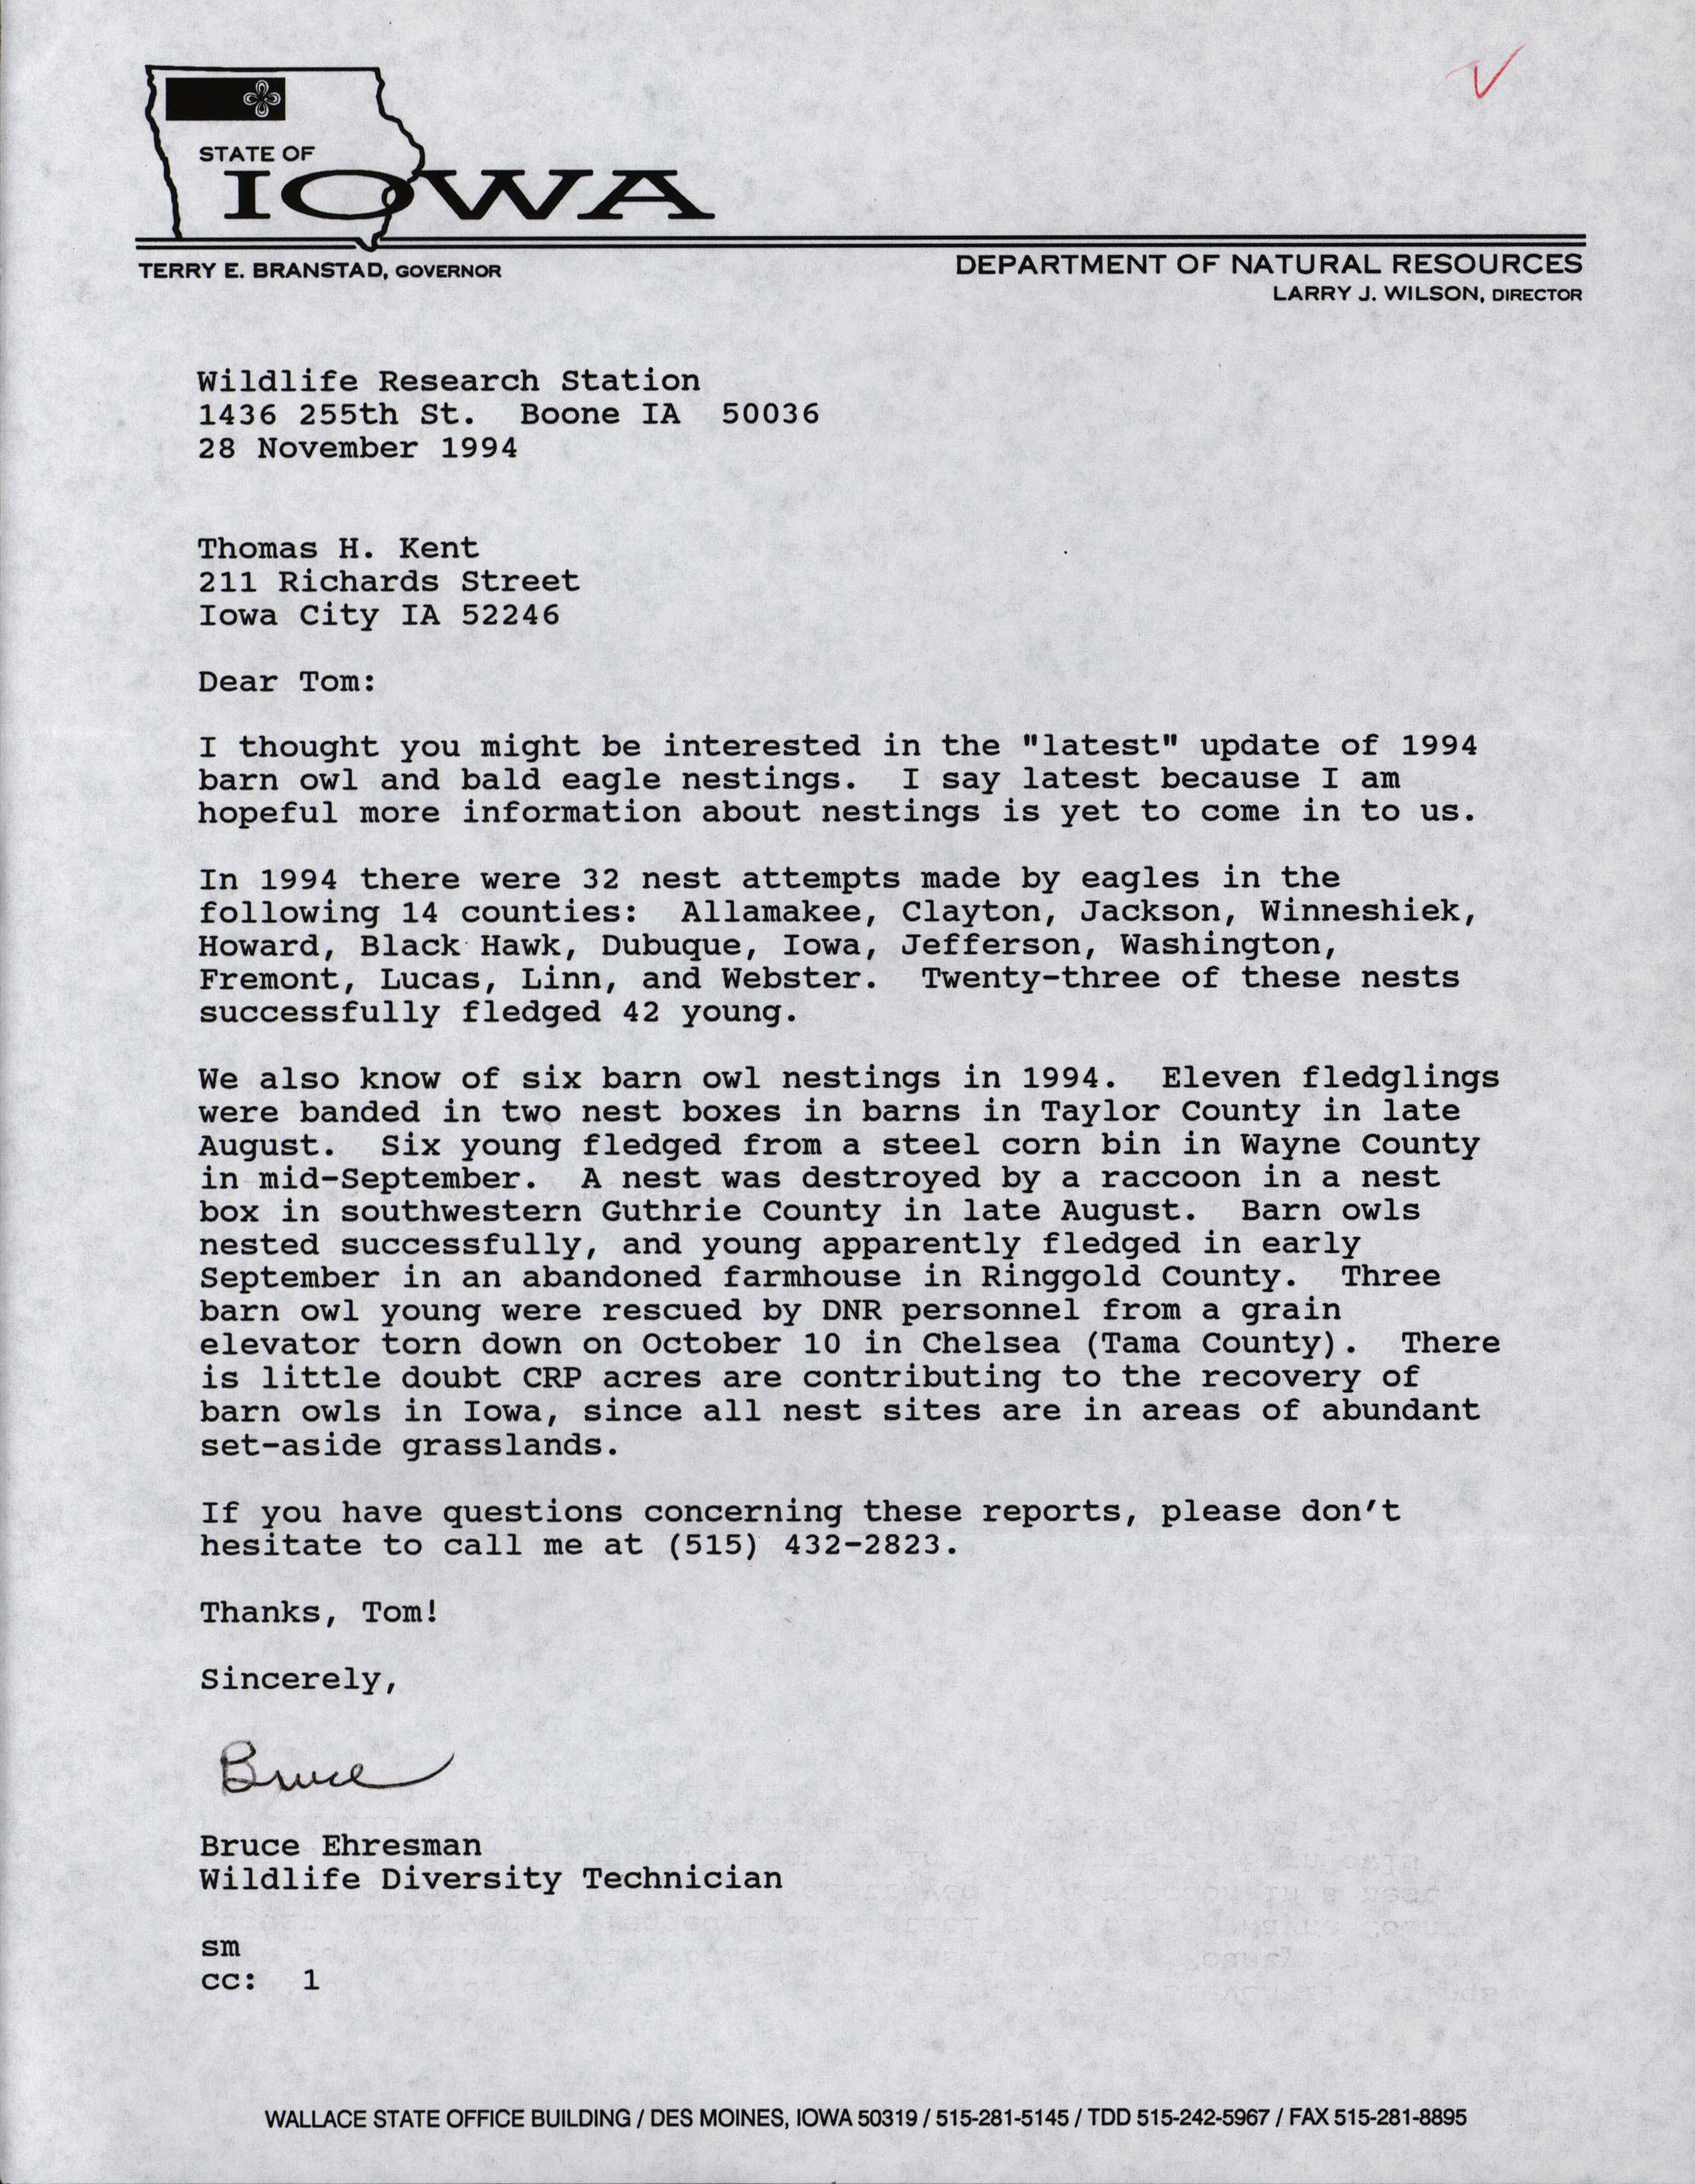 Bruce Ehresman letter to Thomas Kent regarding Bald Eagle and Barn Owl nests, November 28, 1994